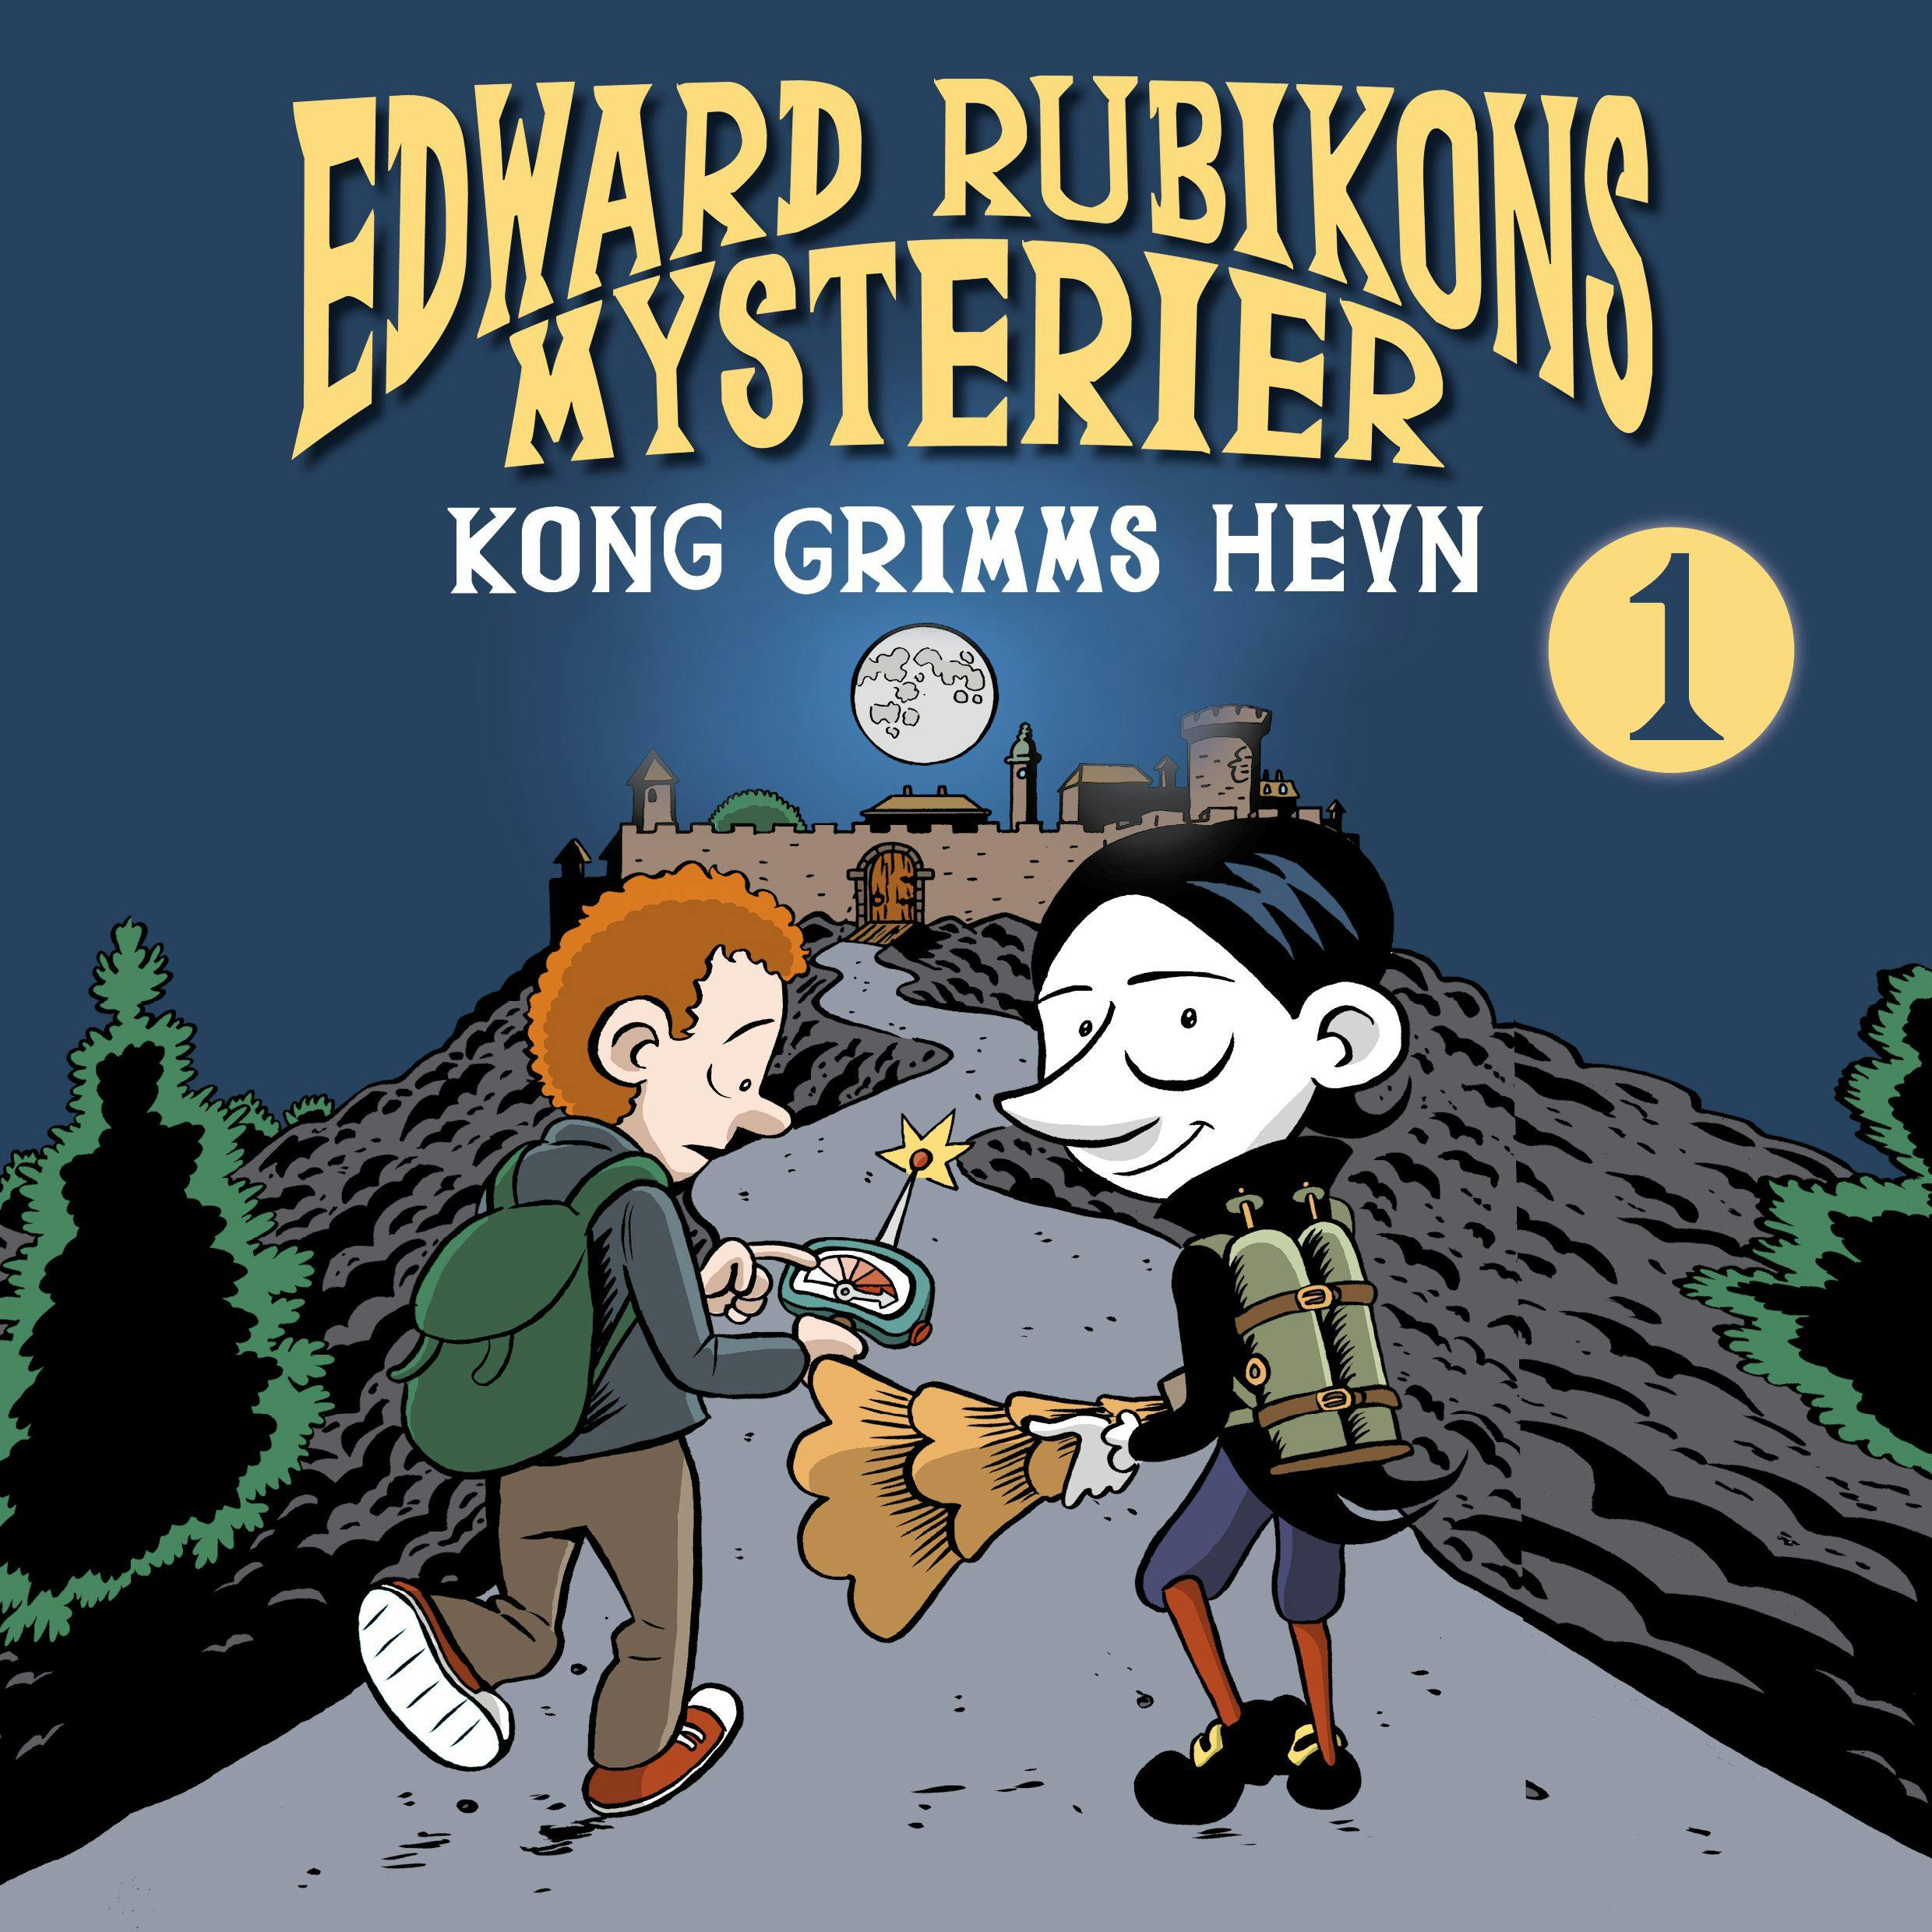 Edward Rubikons mysterier: Kong Grimms hevn - undefined